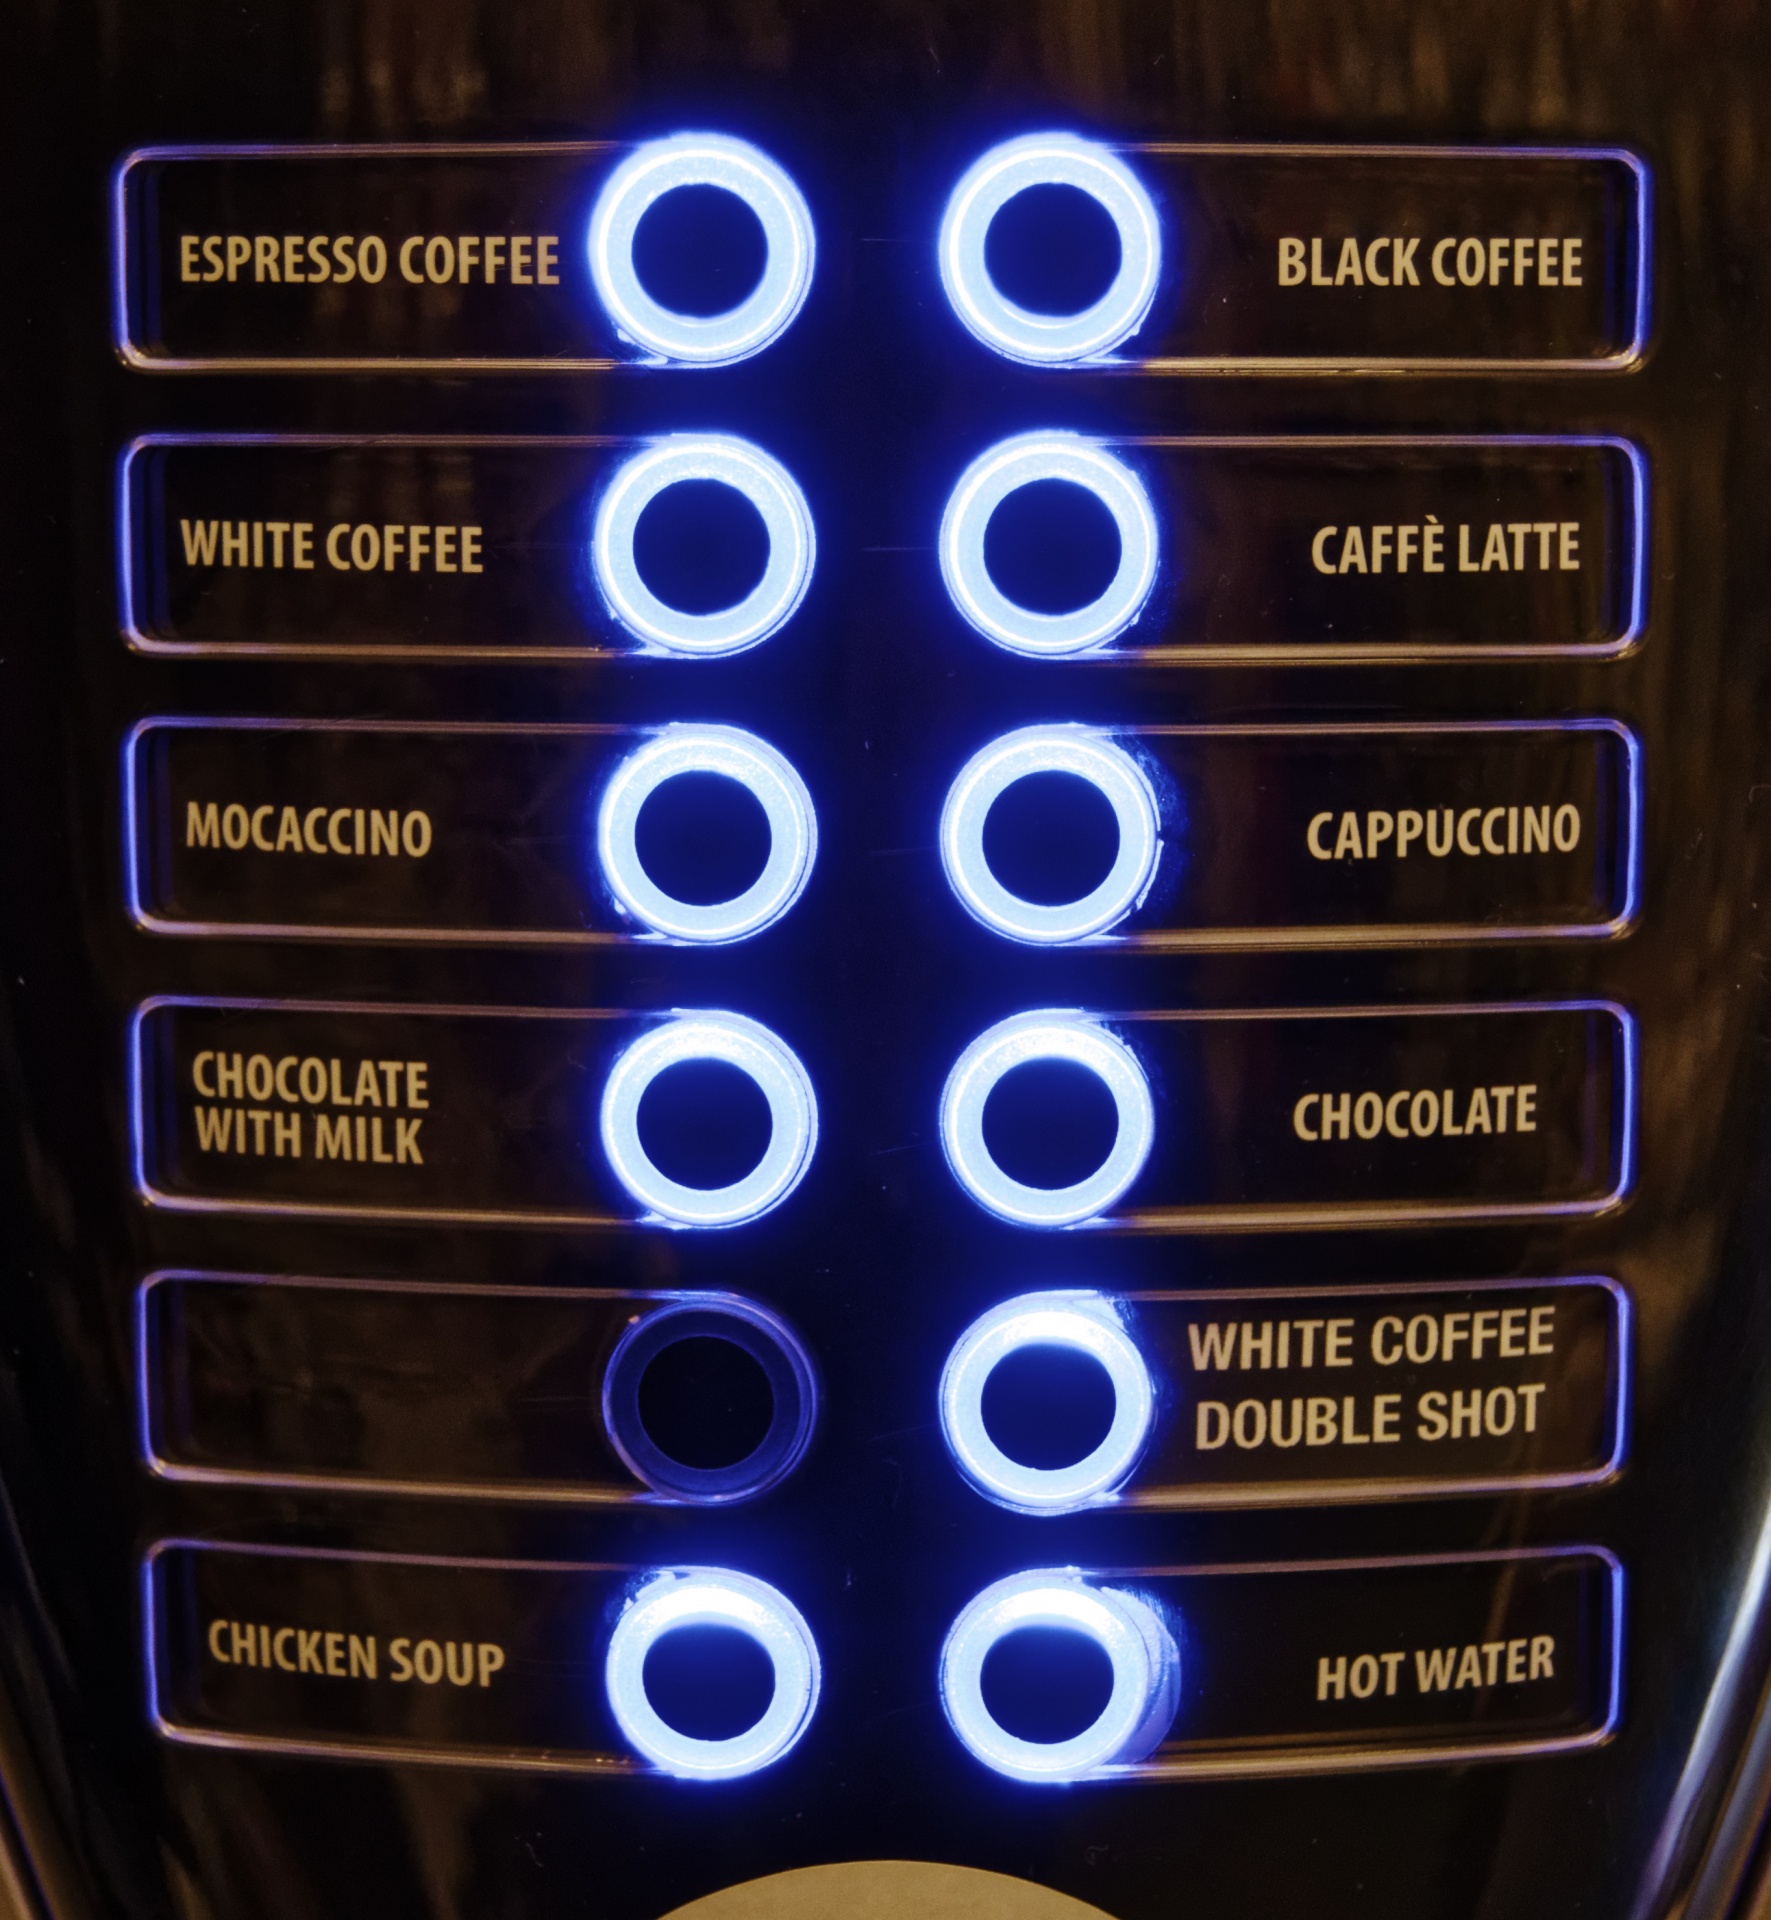 Kavos & Nbsp,  Mašina,  Kava,  Latte,  C,  Mašina,  Espresso,  Gerti,  Kavinė,  Cappuccino